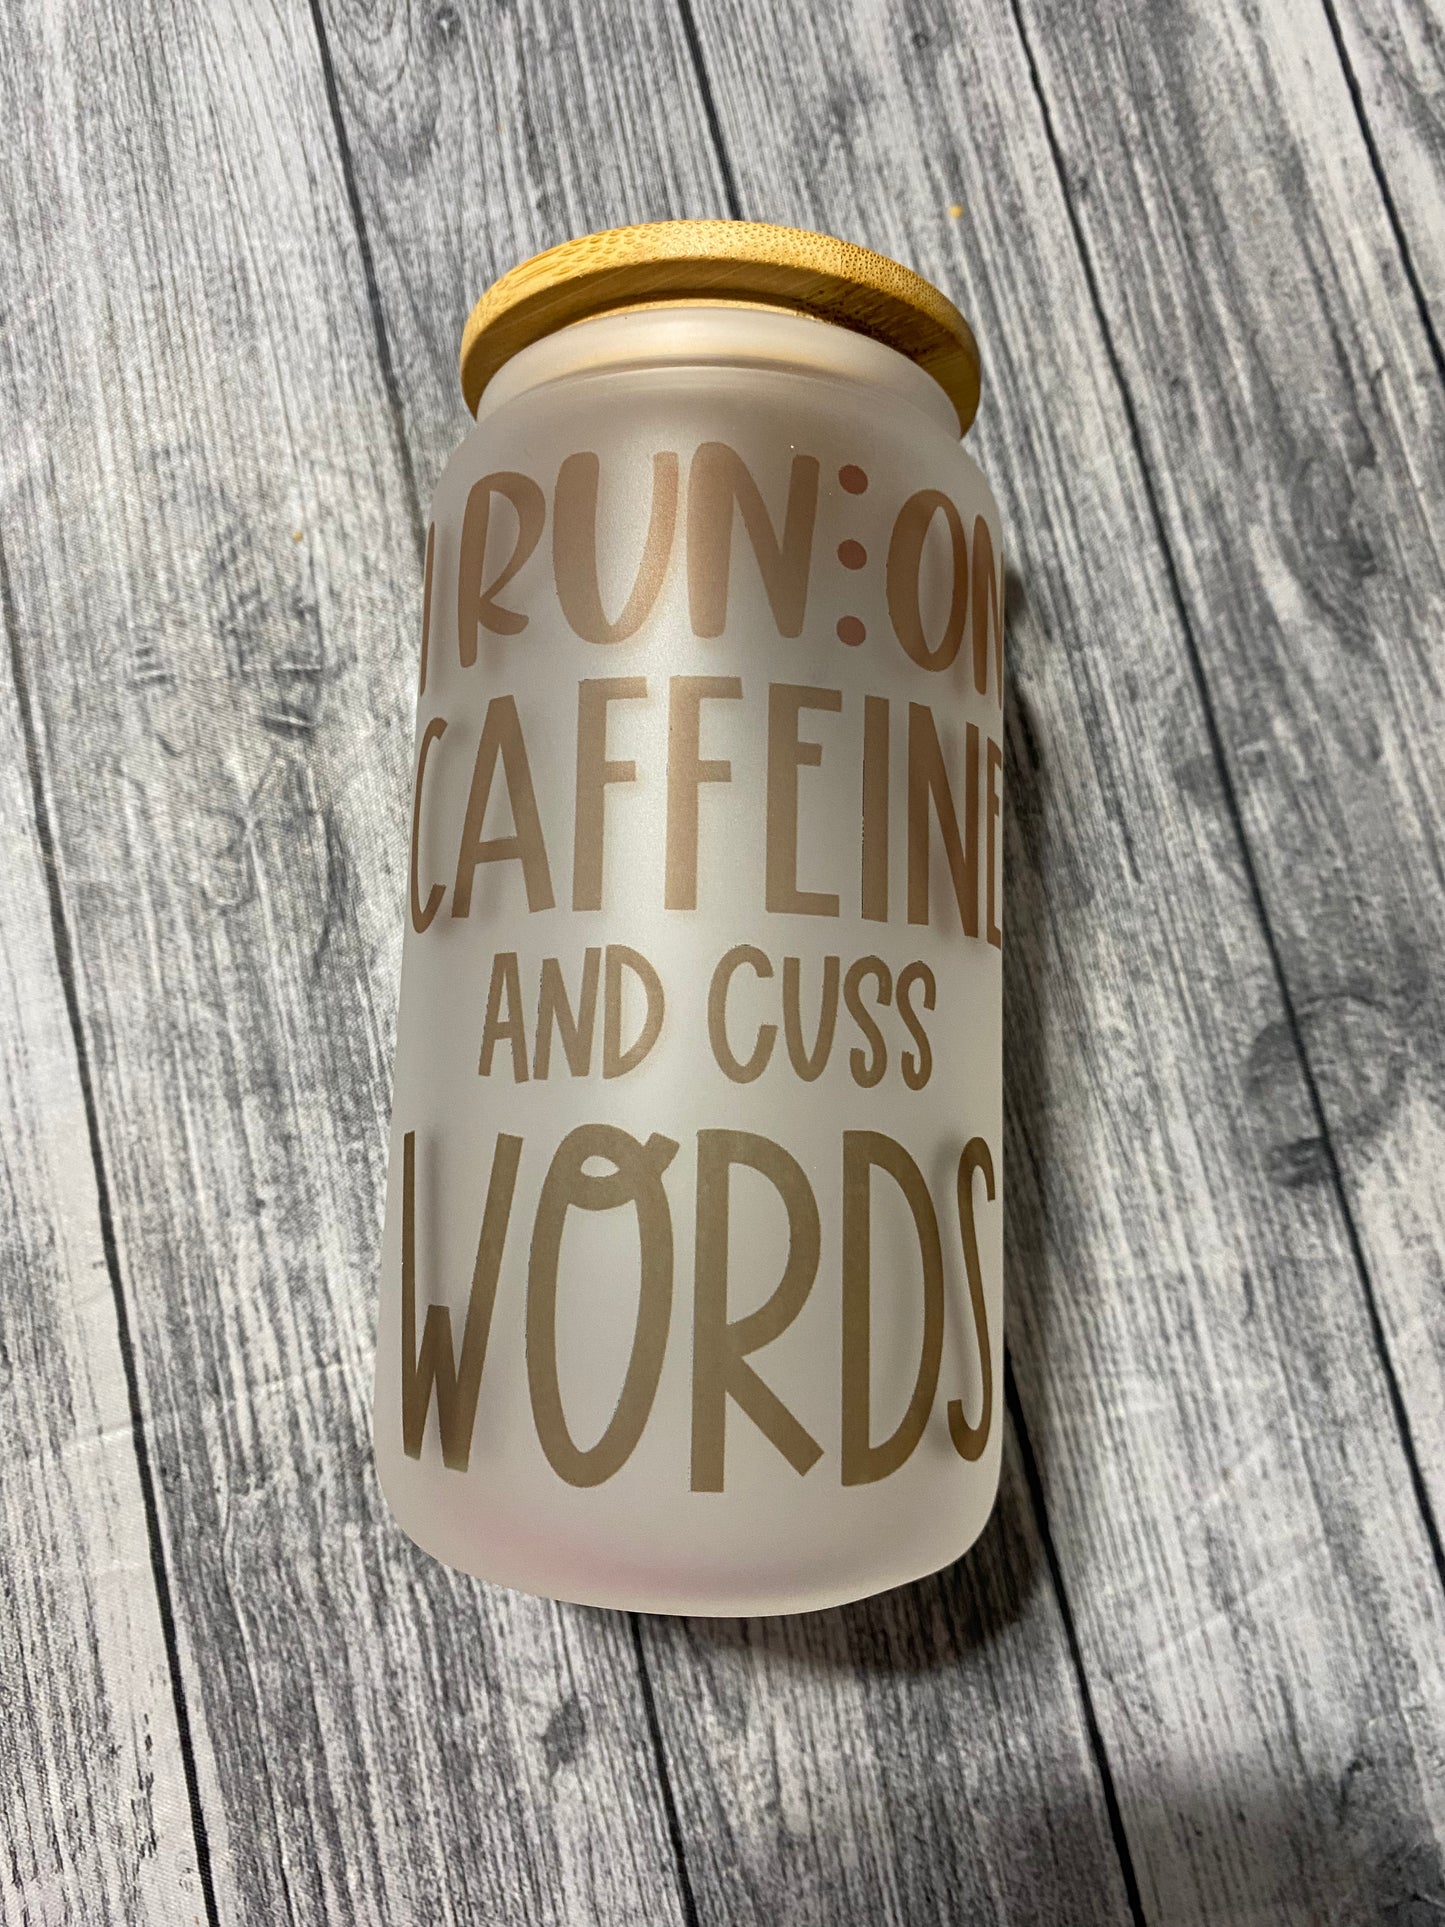 Caffeine and cuss words